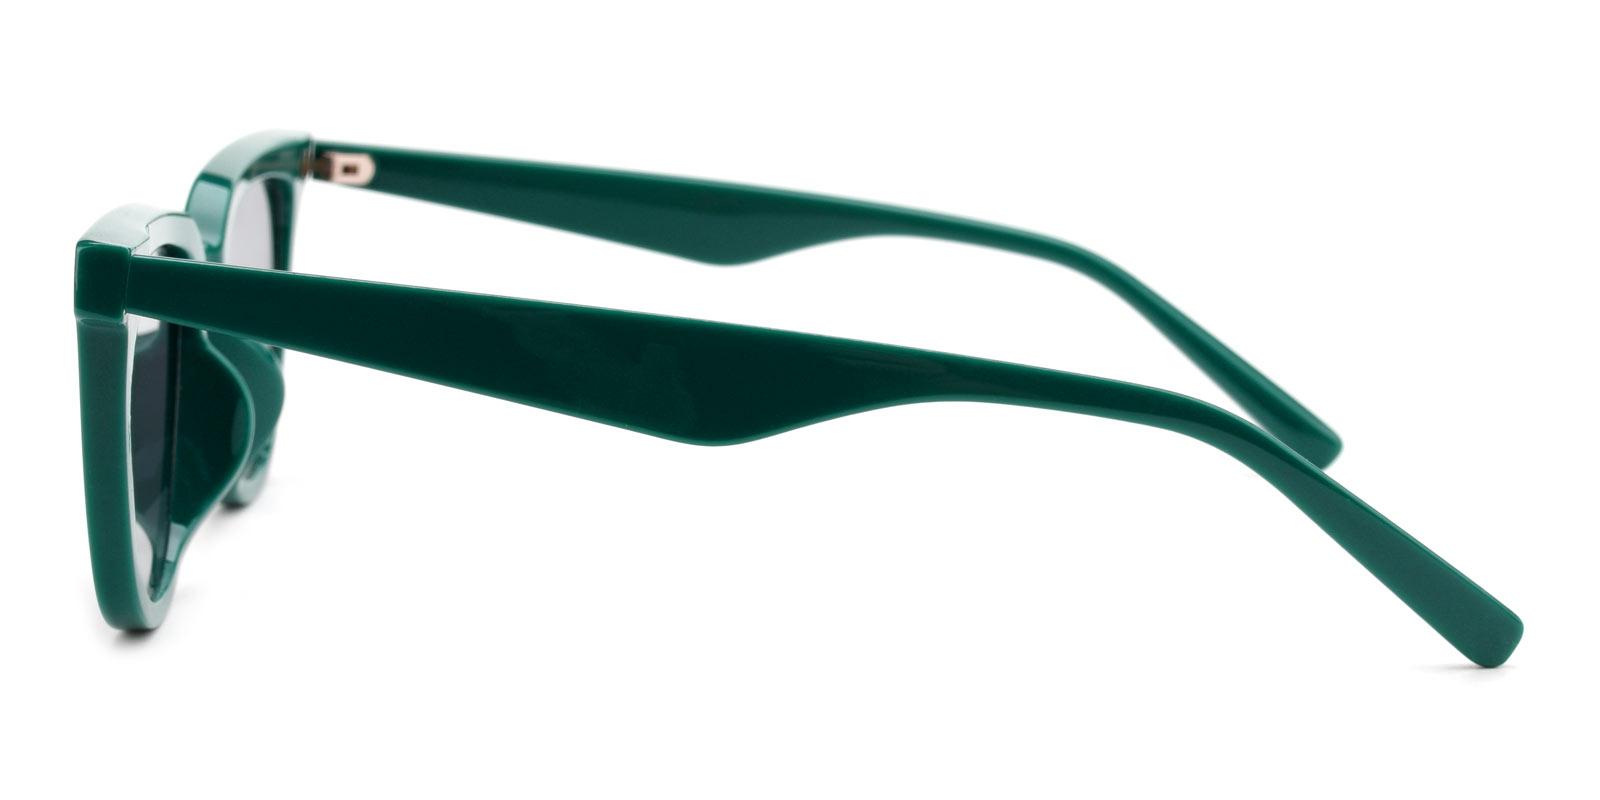 Zane-Green-Cat-TR-Sunglasses-detail